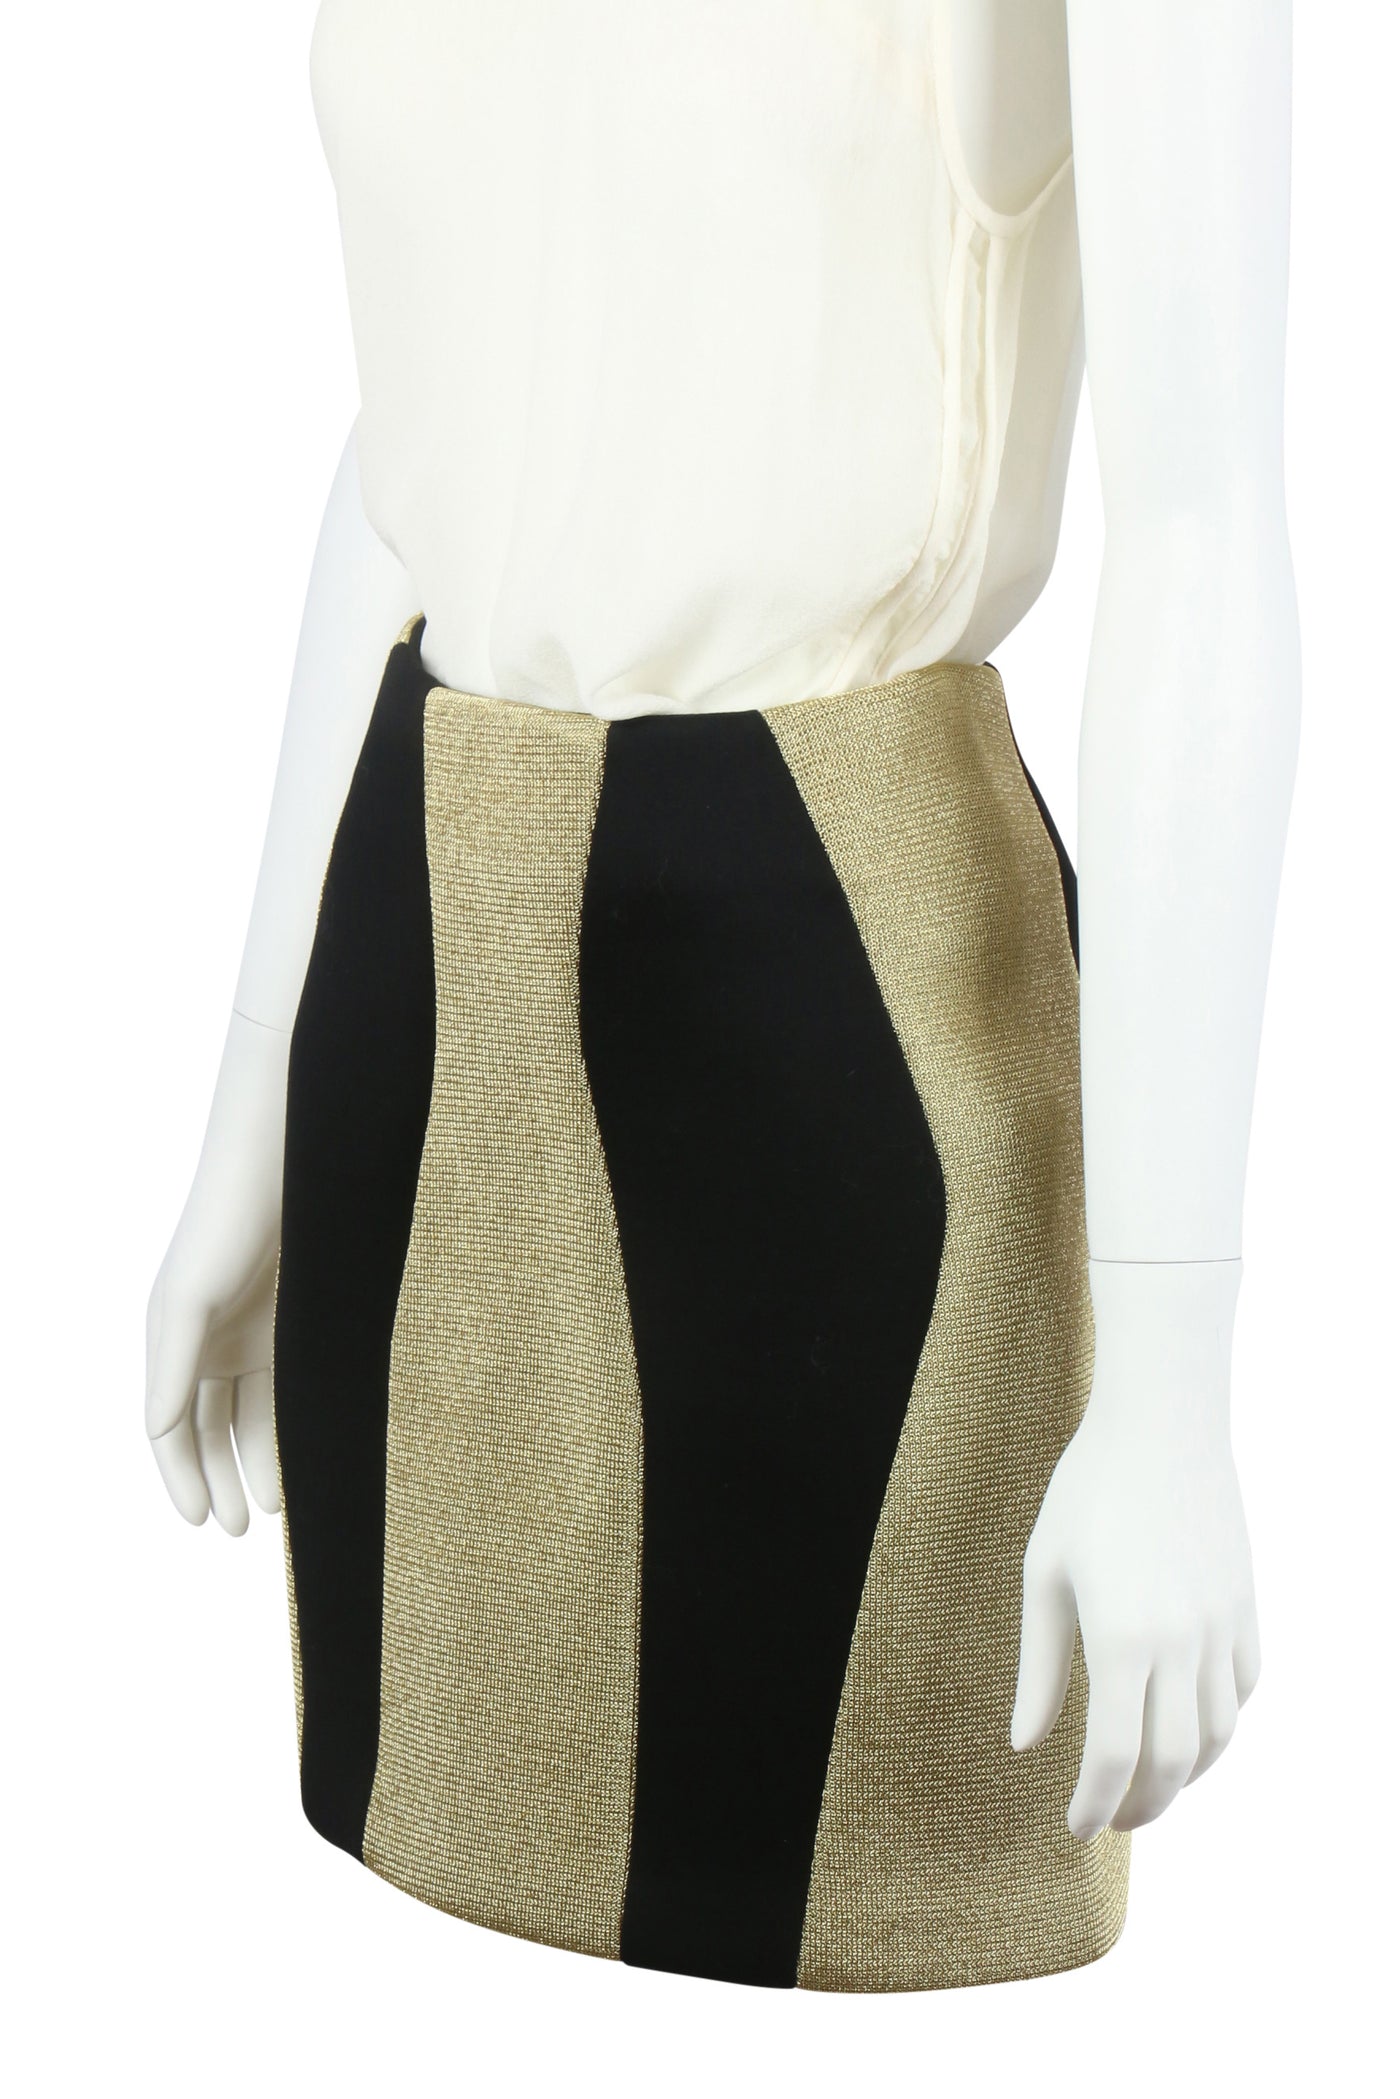 Black and gold panel mini skirt